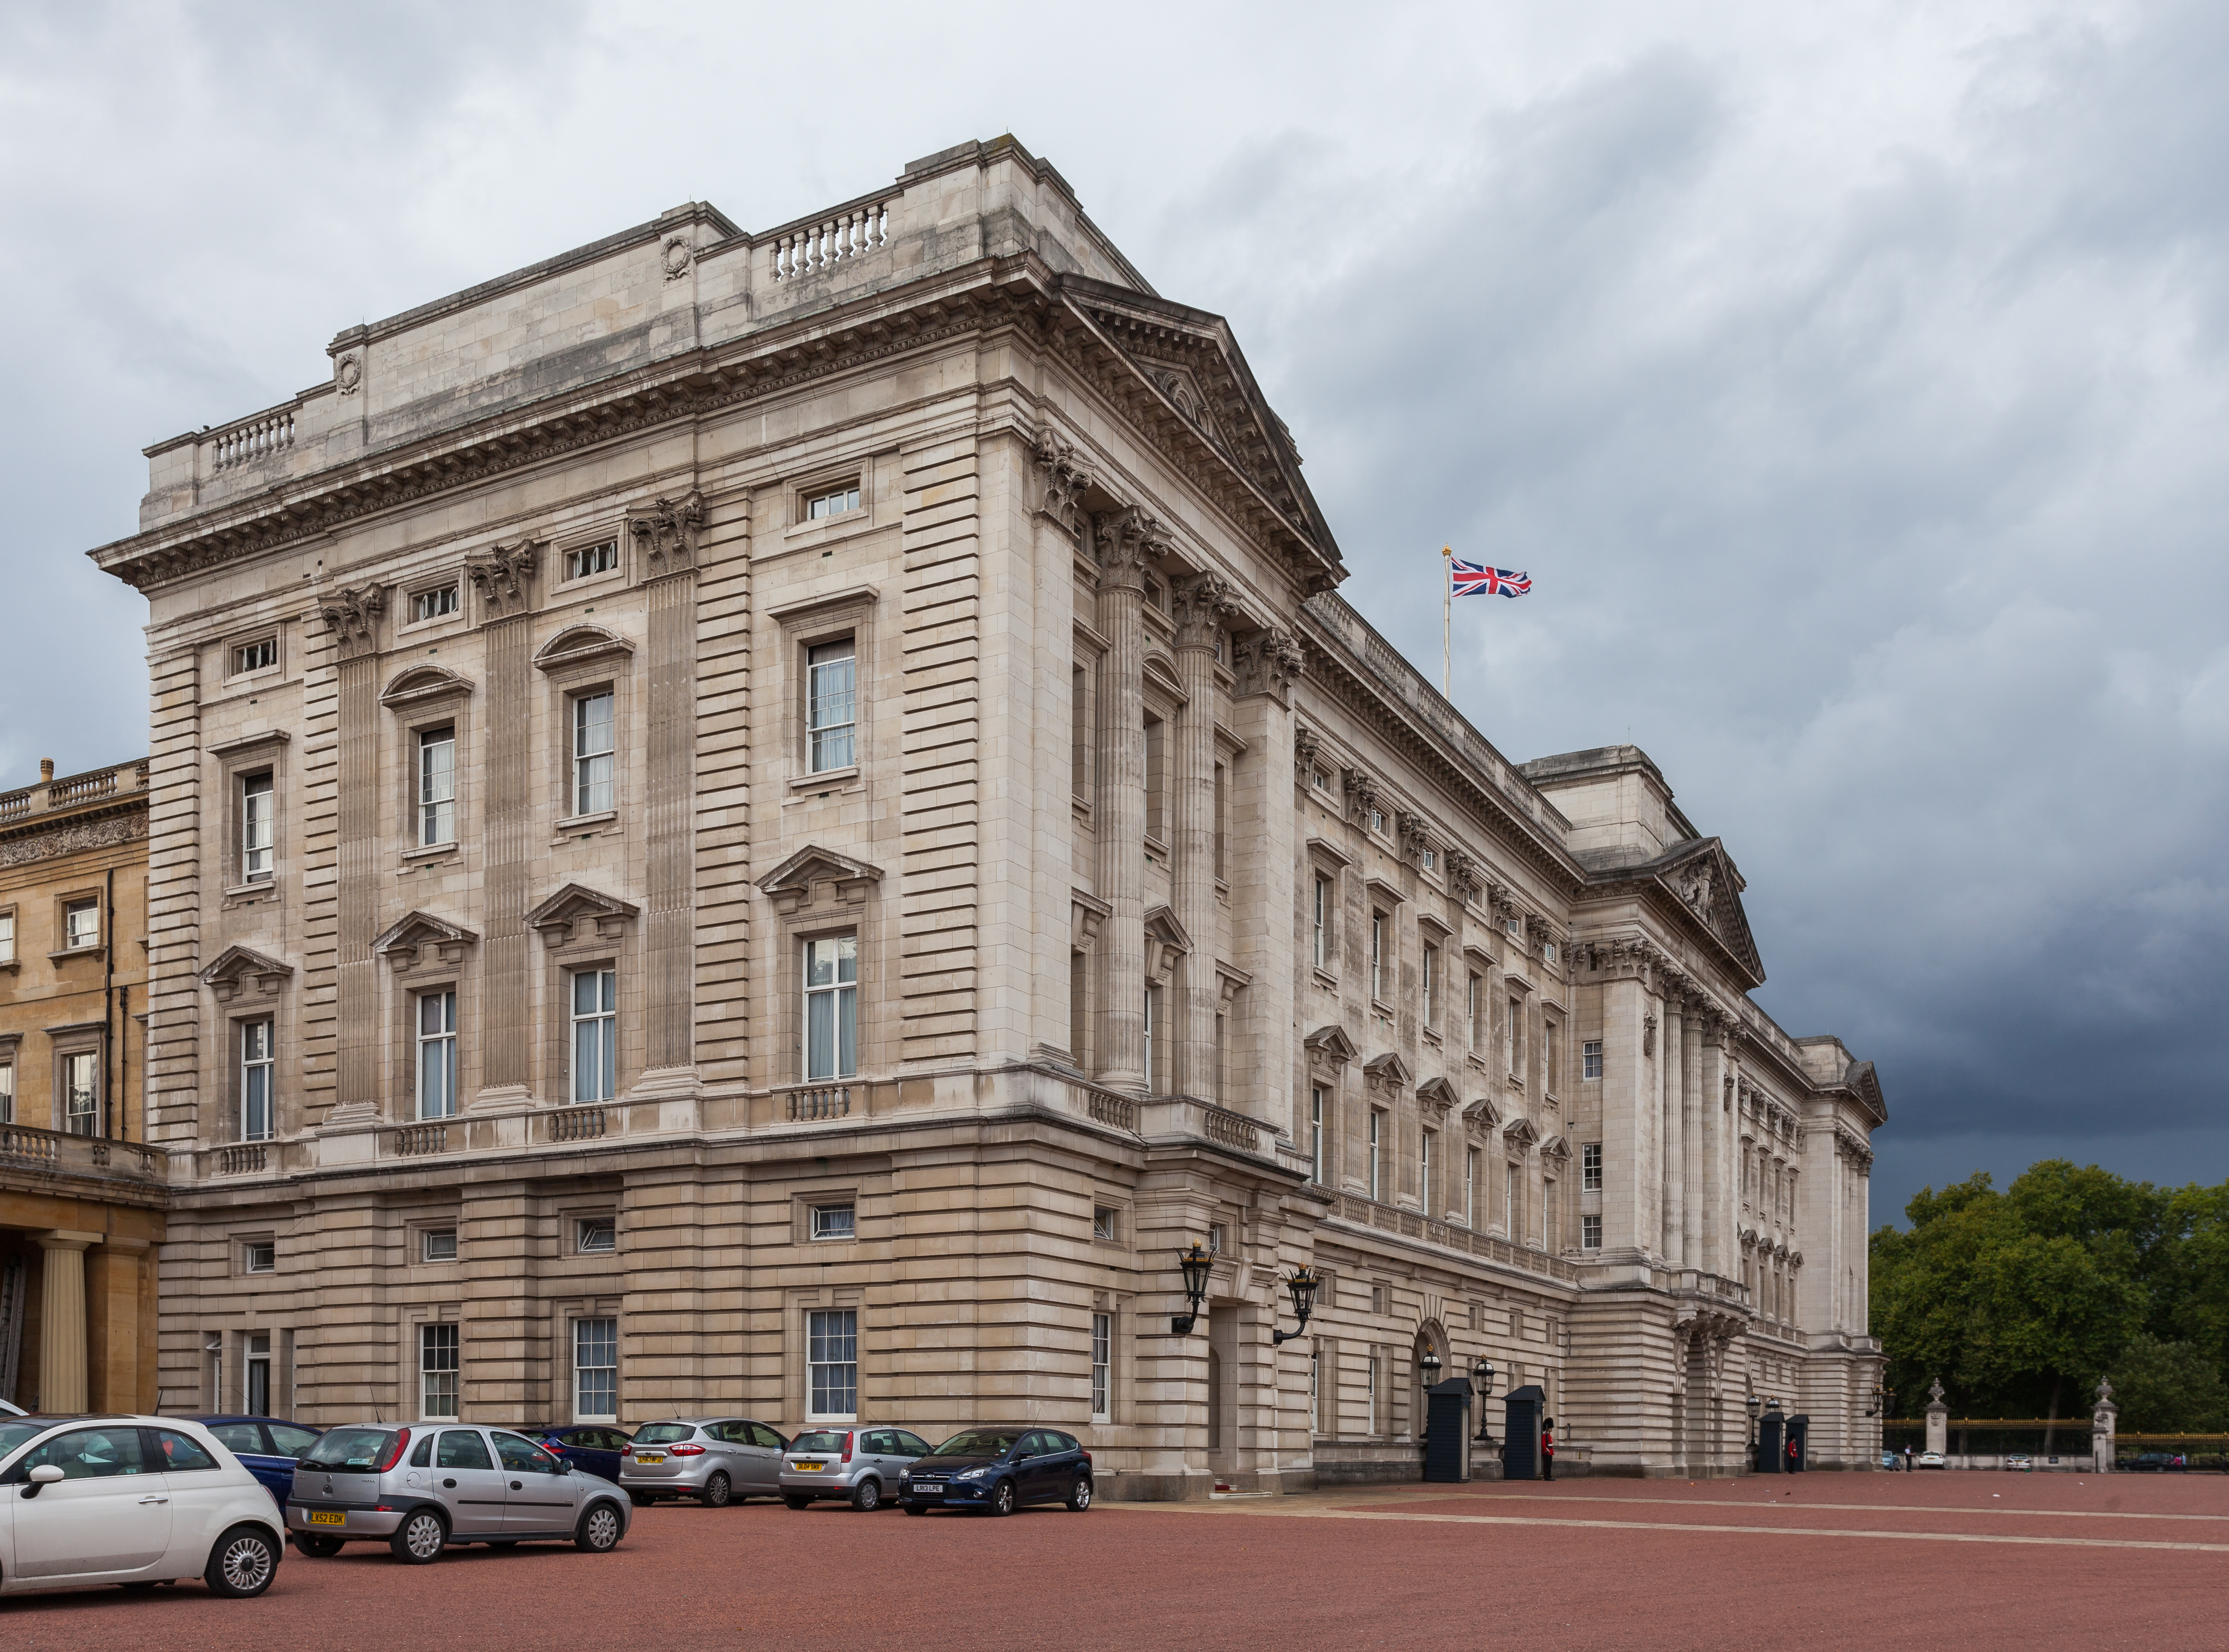 Palacio de Buckingham, Londres, Inglaterra, 2014-08-11, DD 193